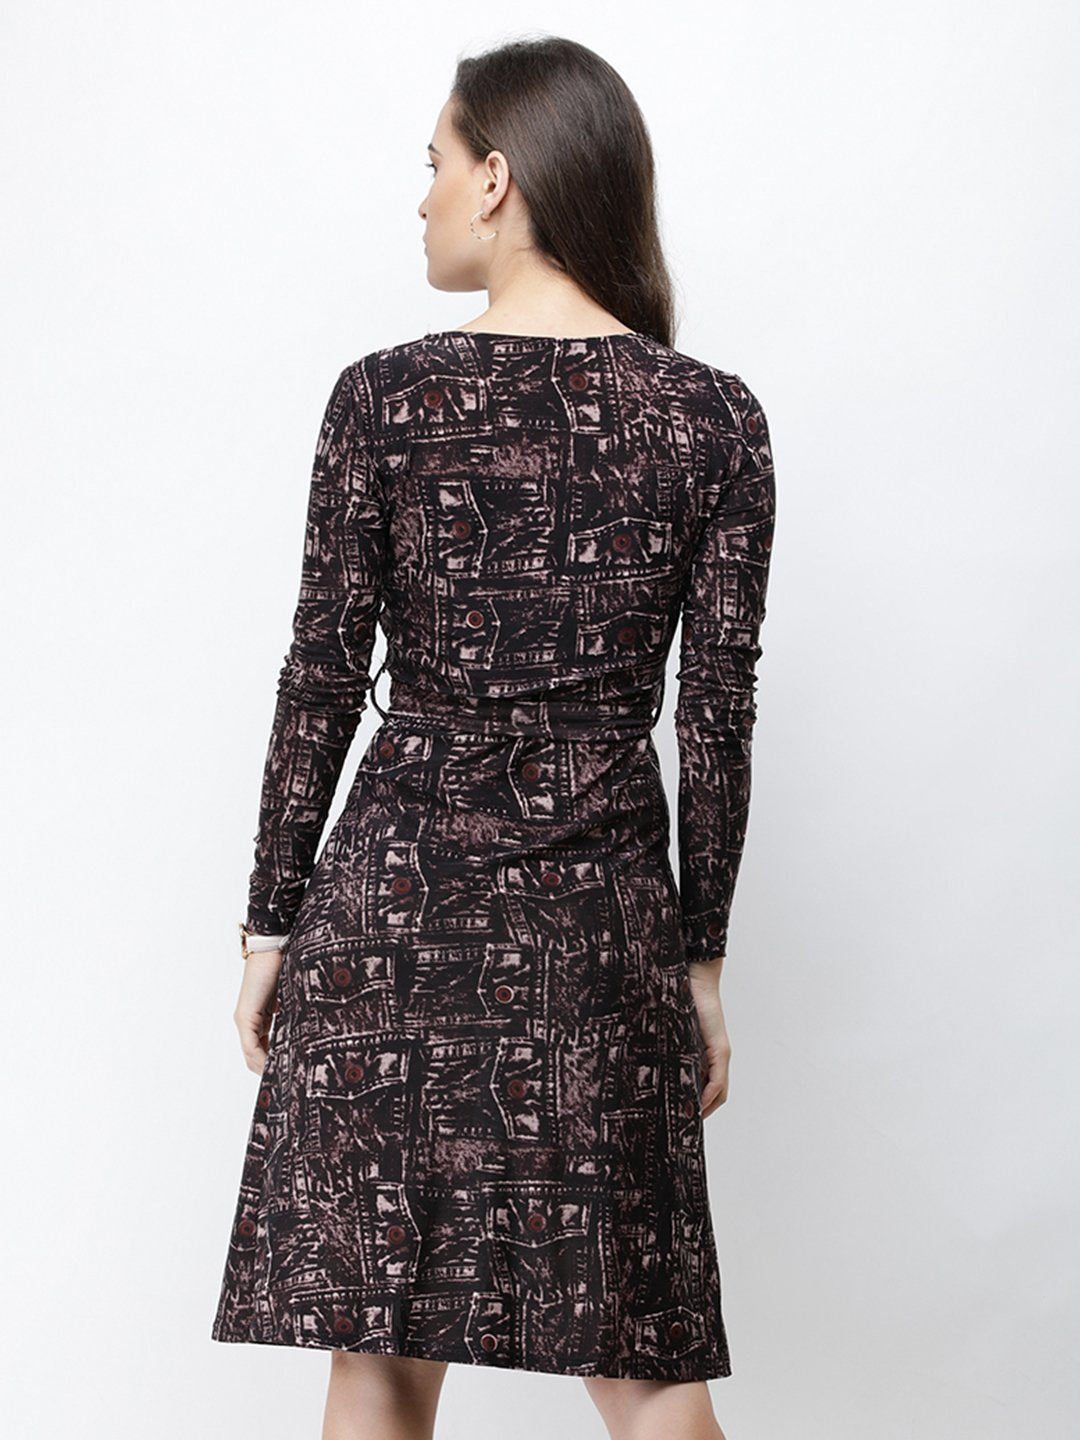 Cation Black Printed Dress